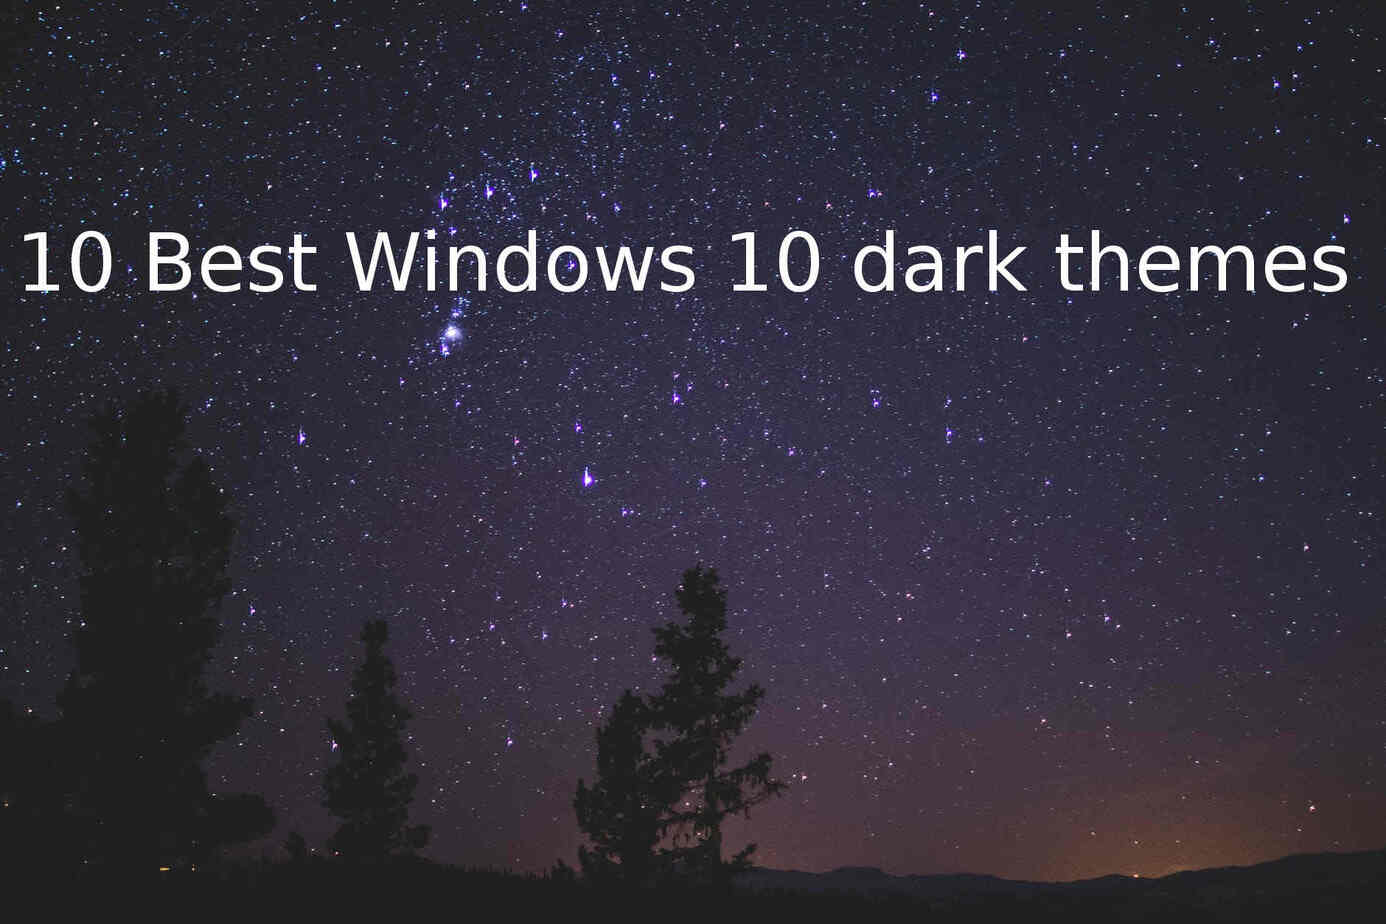 windows 10 dark themes